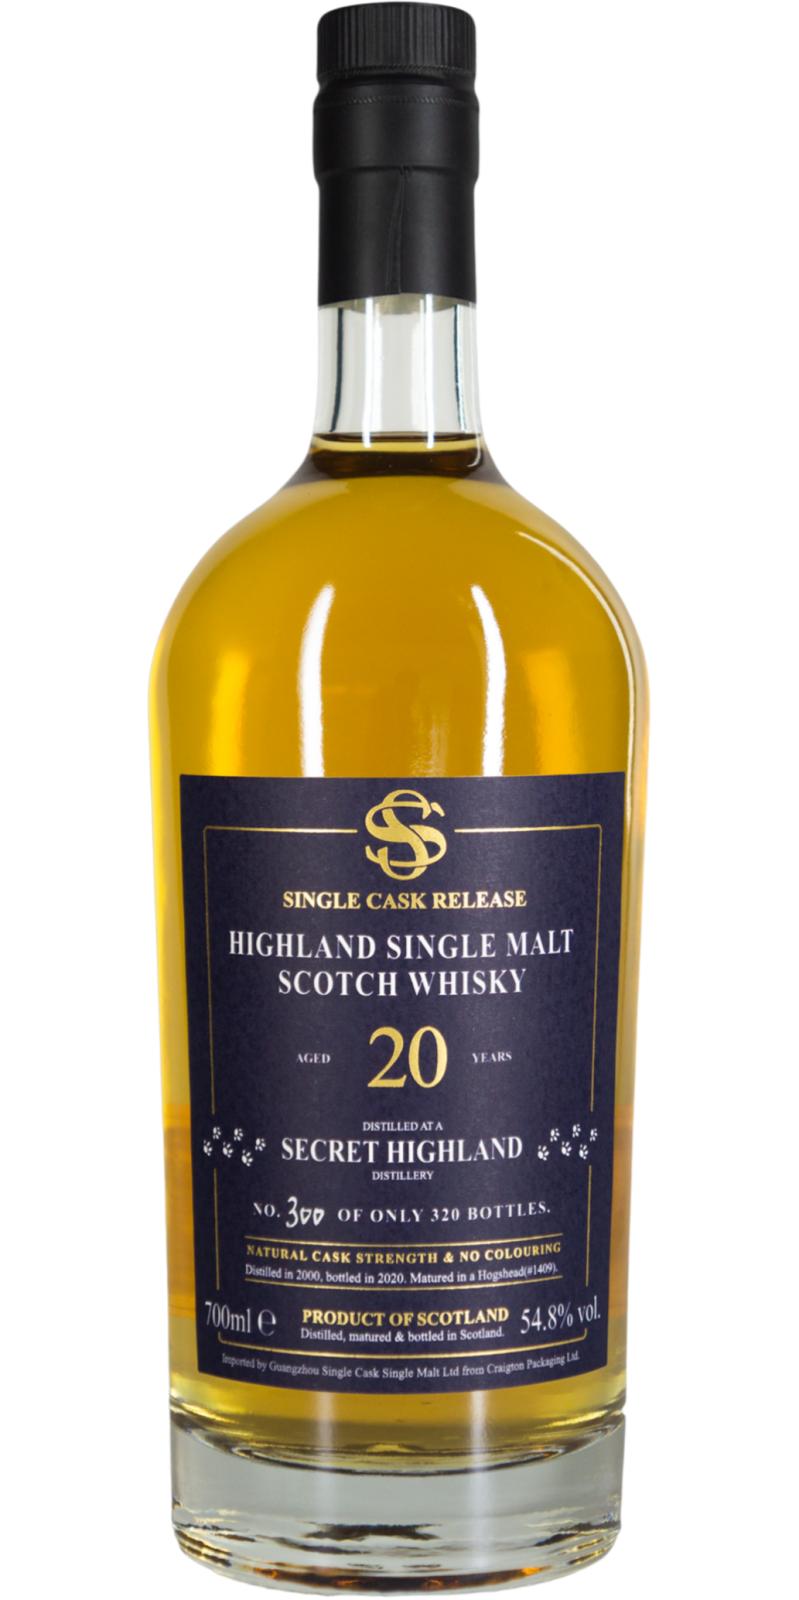 Secret Highland Distillery 2000 SCSM #1409 Guangzhou Single Cask Single Malt LTD 54.8% 700ml